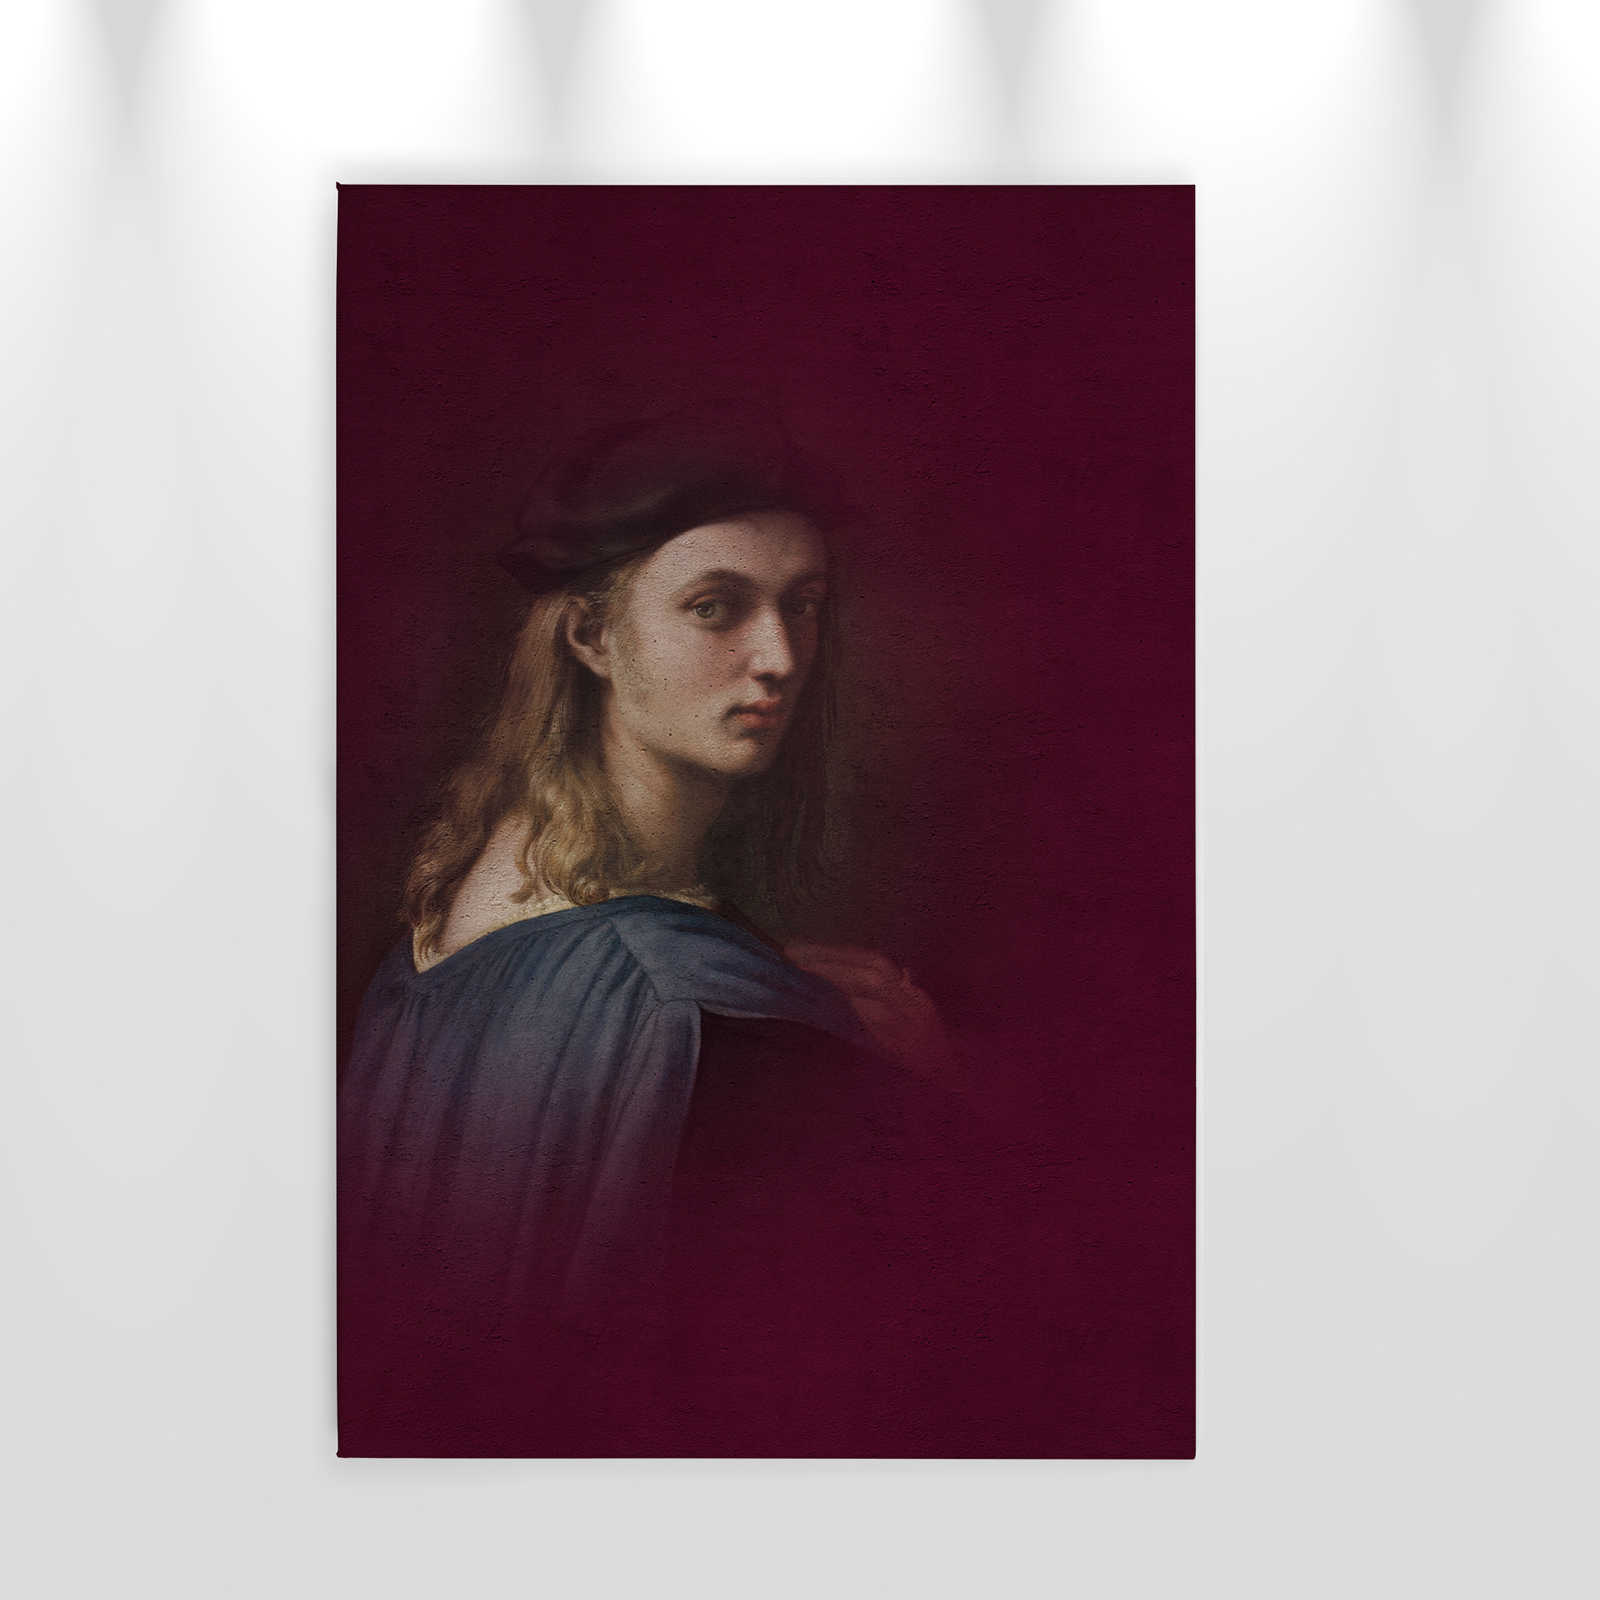             Cuadro lienzo retrato clásico joven - 0,60 m x 0,90 m
        